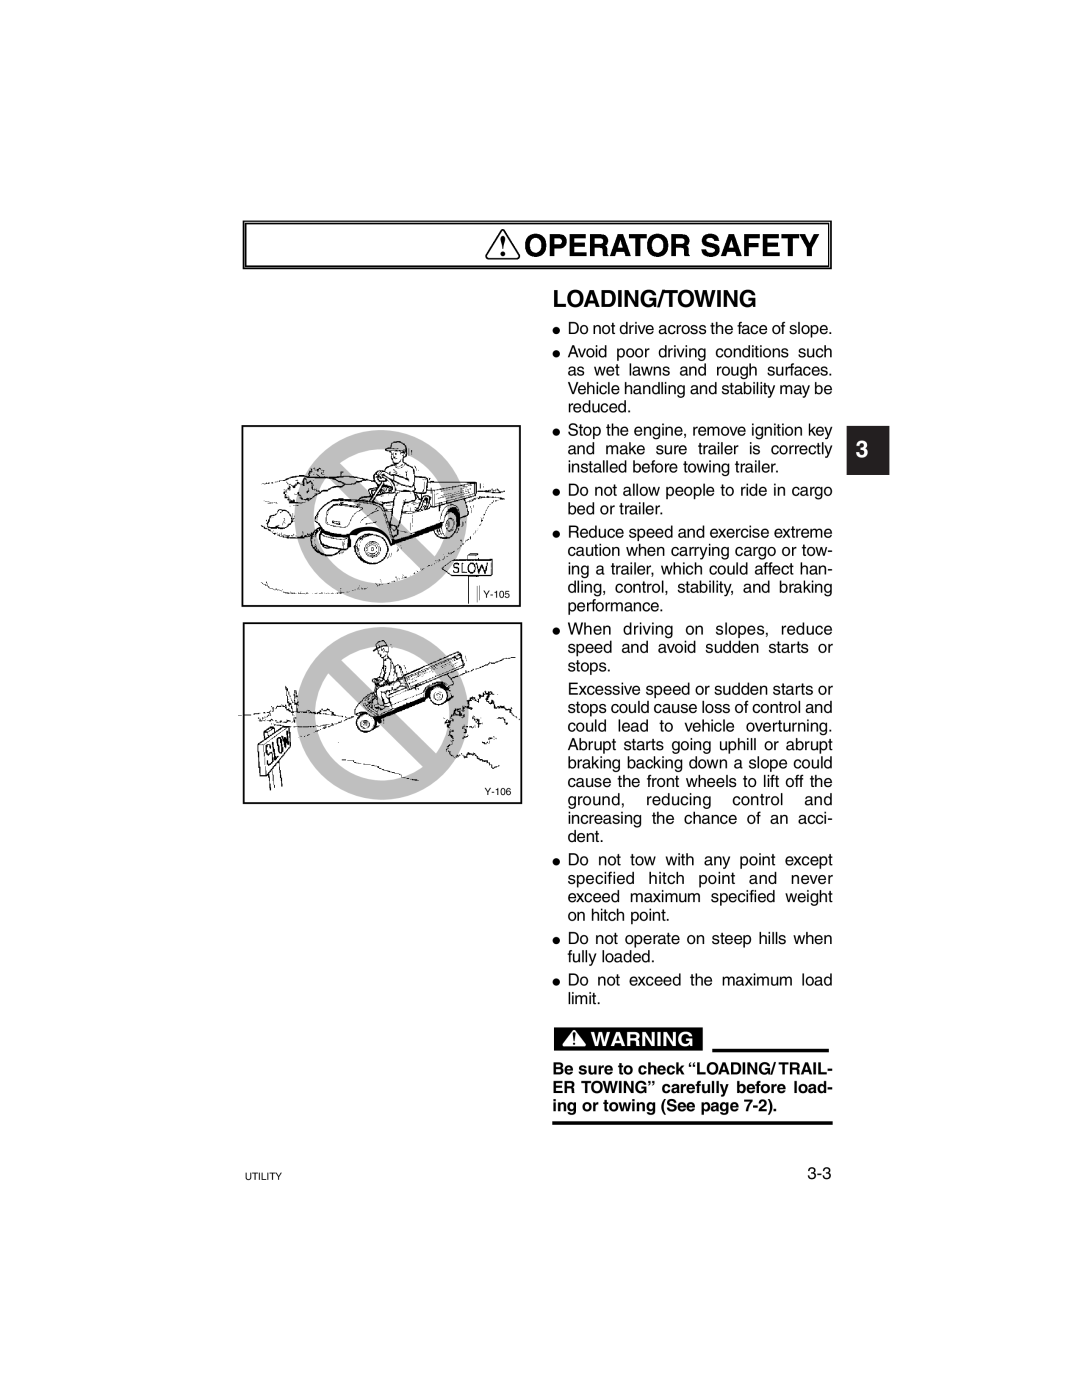 Yamaha G21A manual Operator Safety, Loading/Towing, 1 2 3 